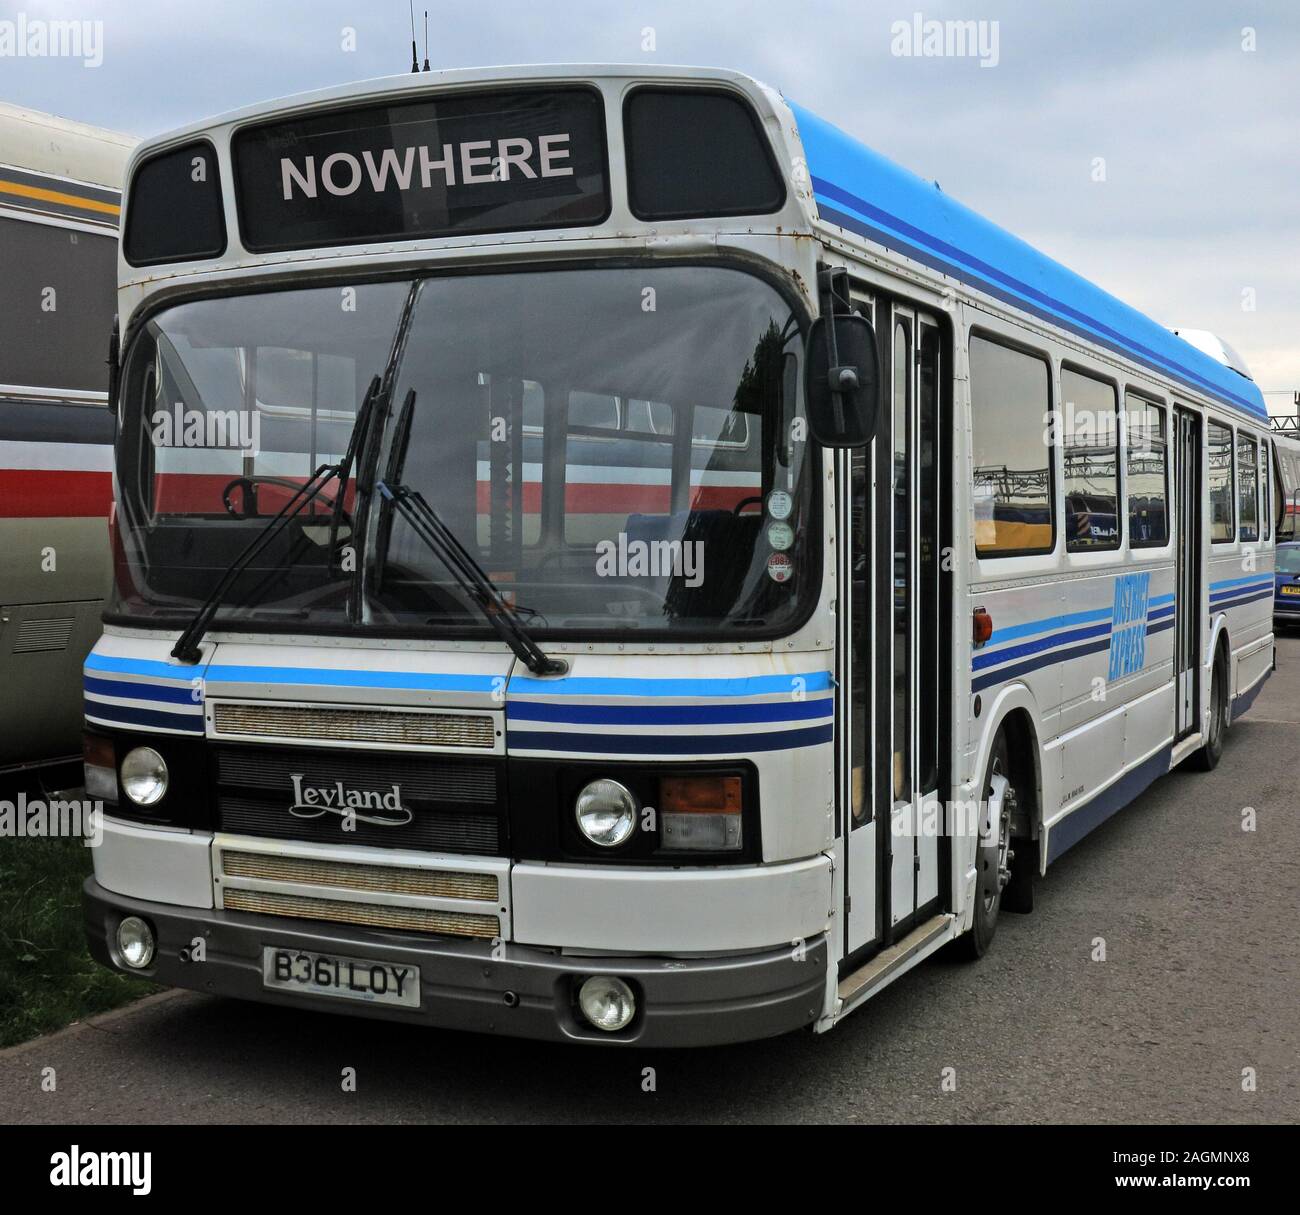 Brexit Bus ins Nirgendwo, Leyland, Bezirk express - Leyland B 361 LOY, England, Großbritannien Stockfoto